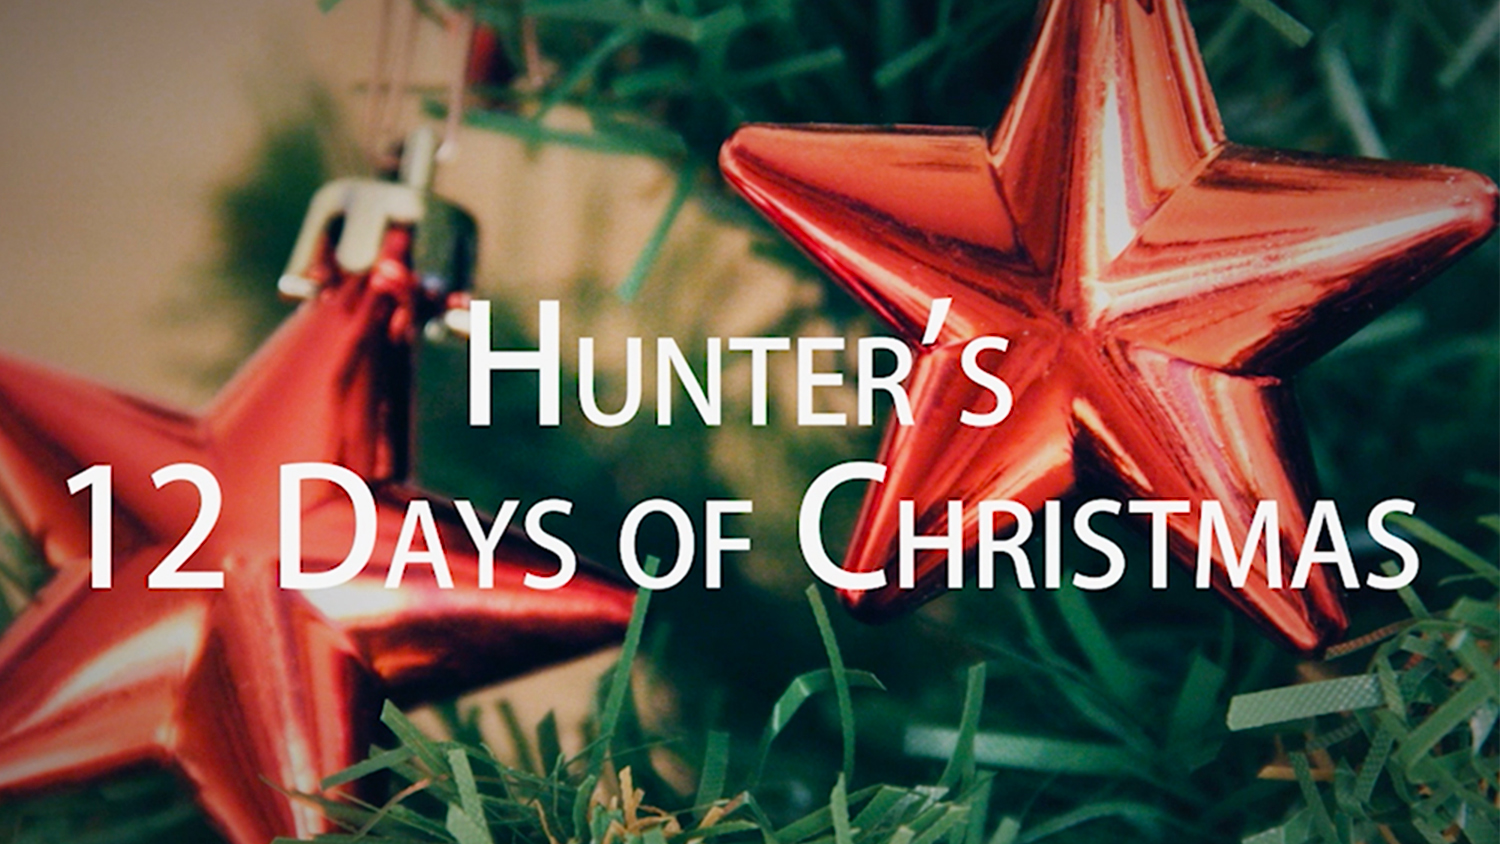 The Hunter’s 12 Days of Christmas